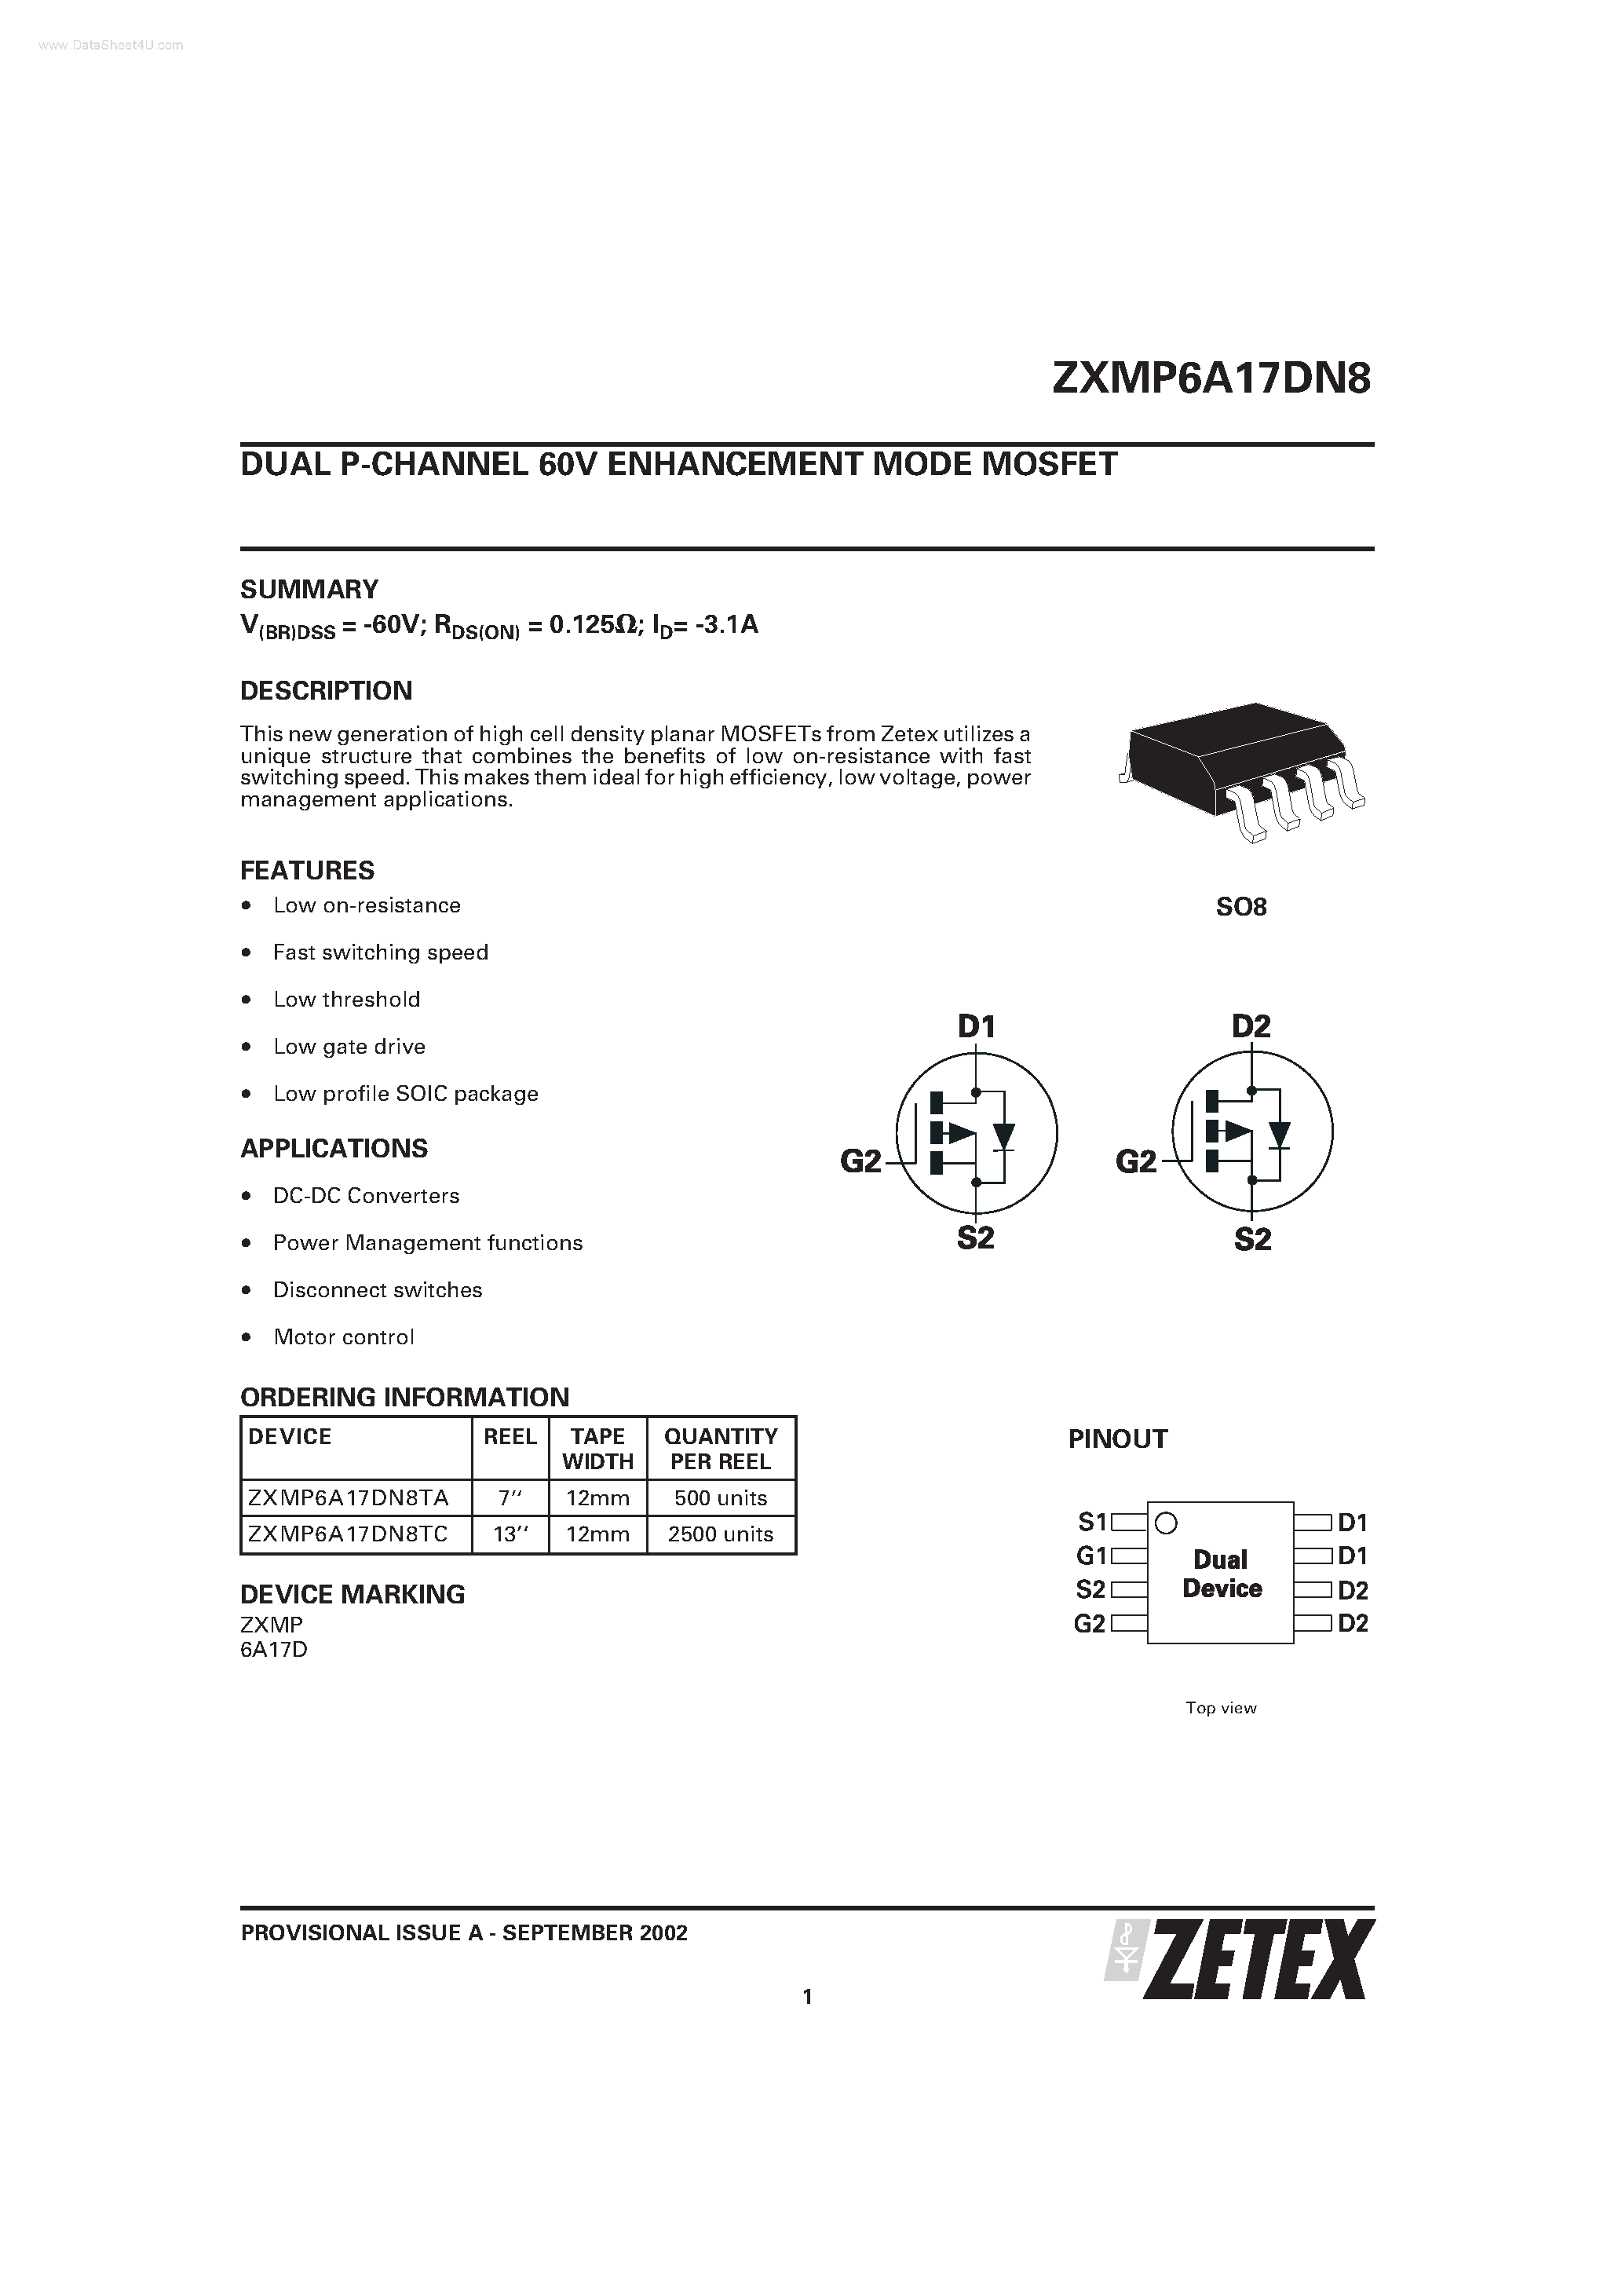 Datasheet ZXMP6A17DN8 - DUAL P-CHANNEL 60V ENHANCEMENT MODE MOSFET page 1